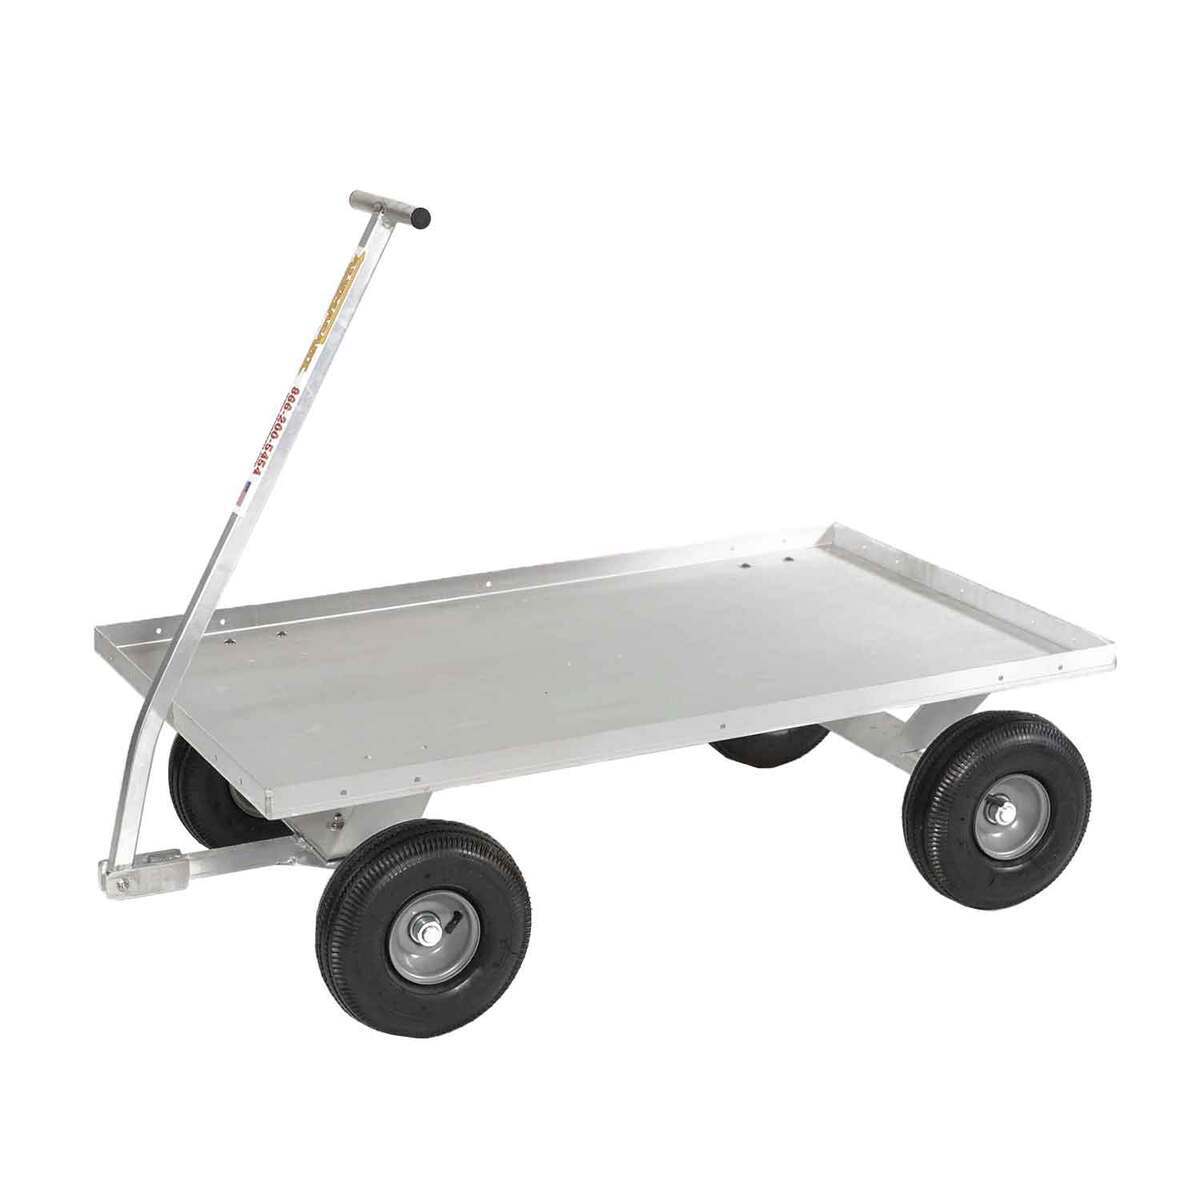 Alumacart Pull Wagon